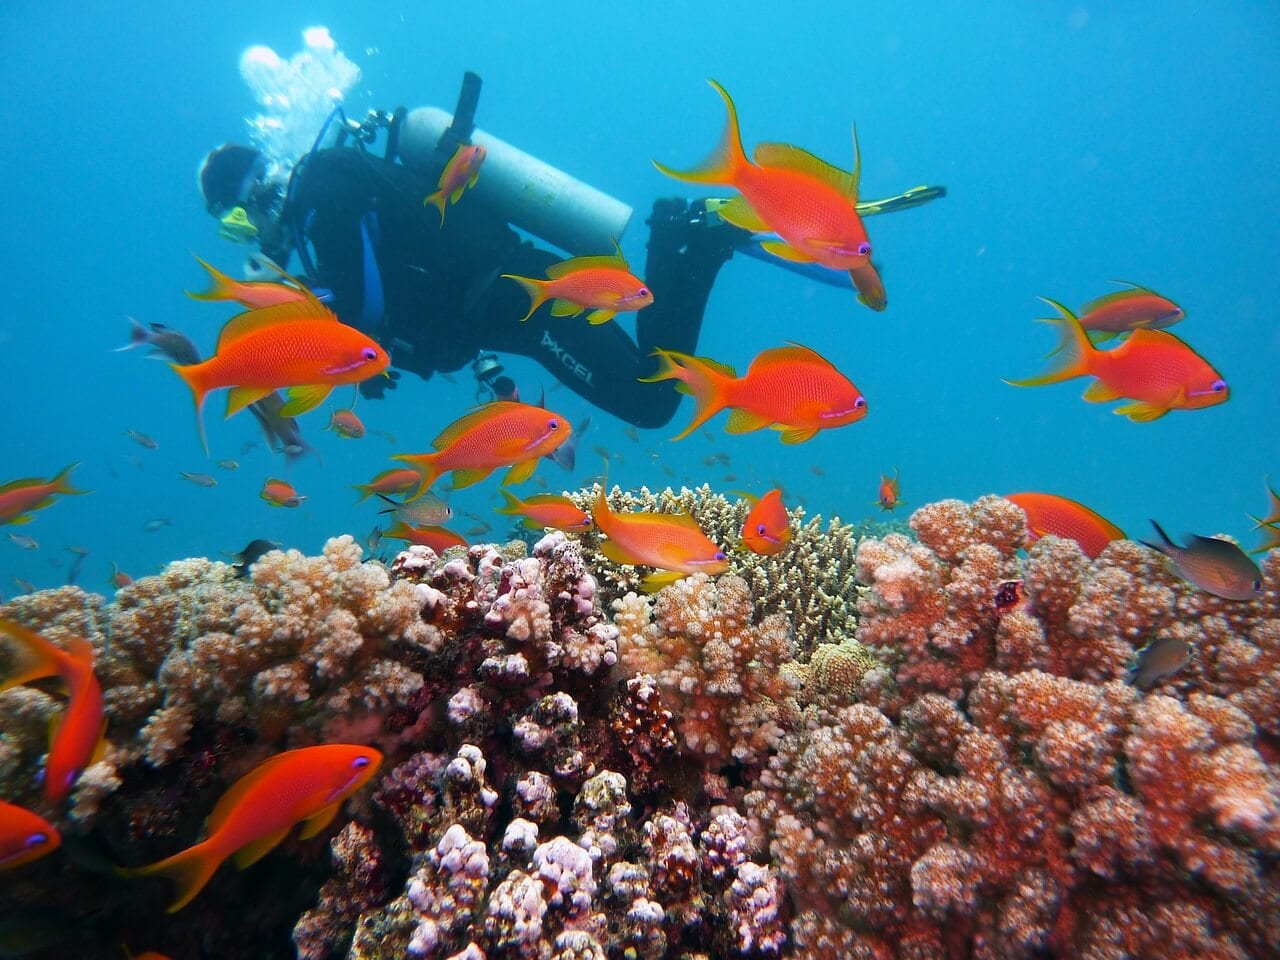 https://pixabay.com/illustrations/diving-underwater-water-divers-1808717/